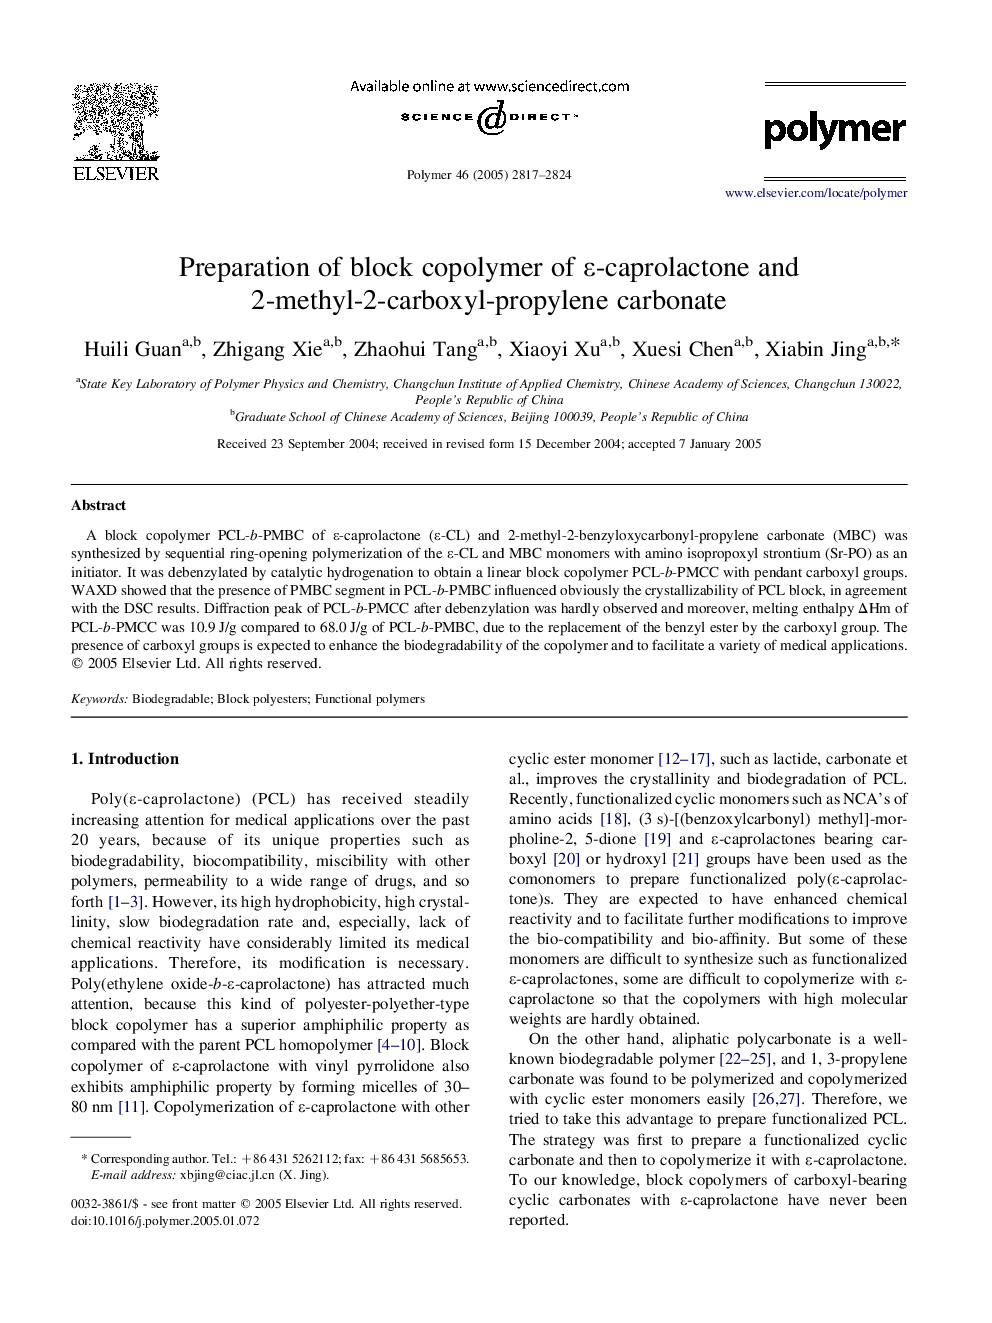 Preparation of block copolymer of É-caprolactone and 2-methyl-2-carboxyl-propylene carbonate